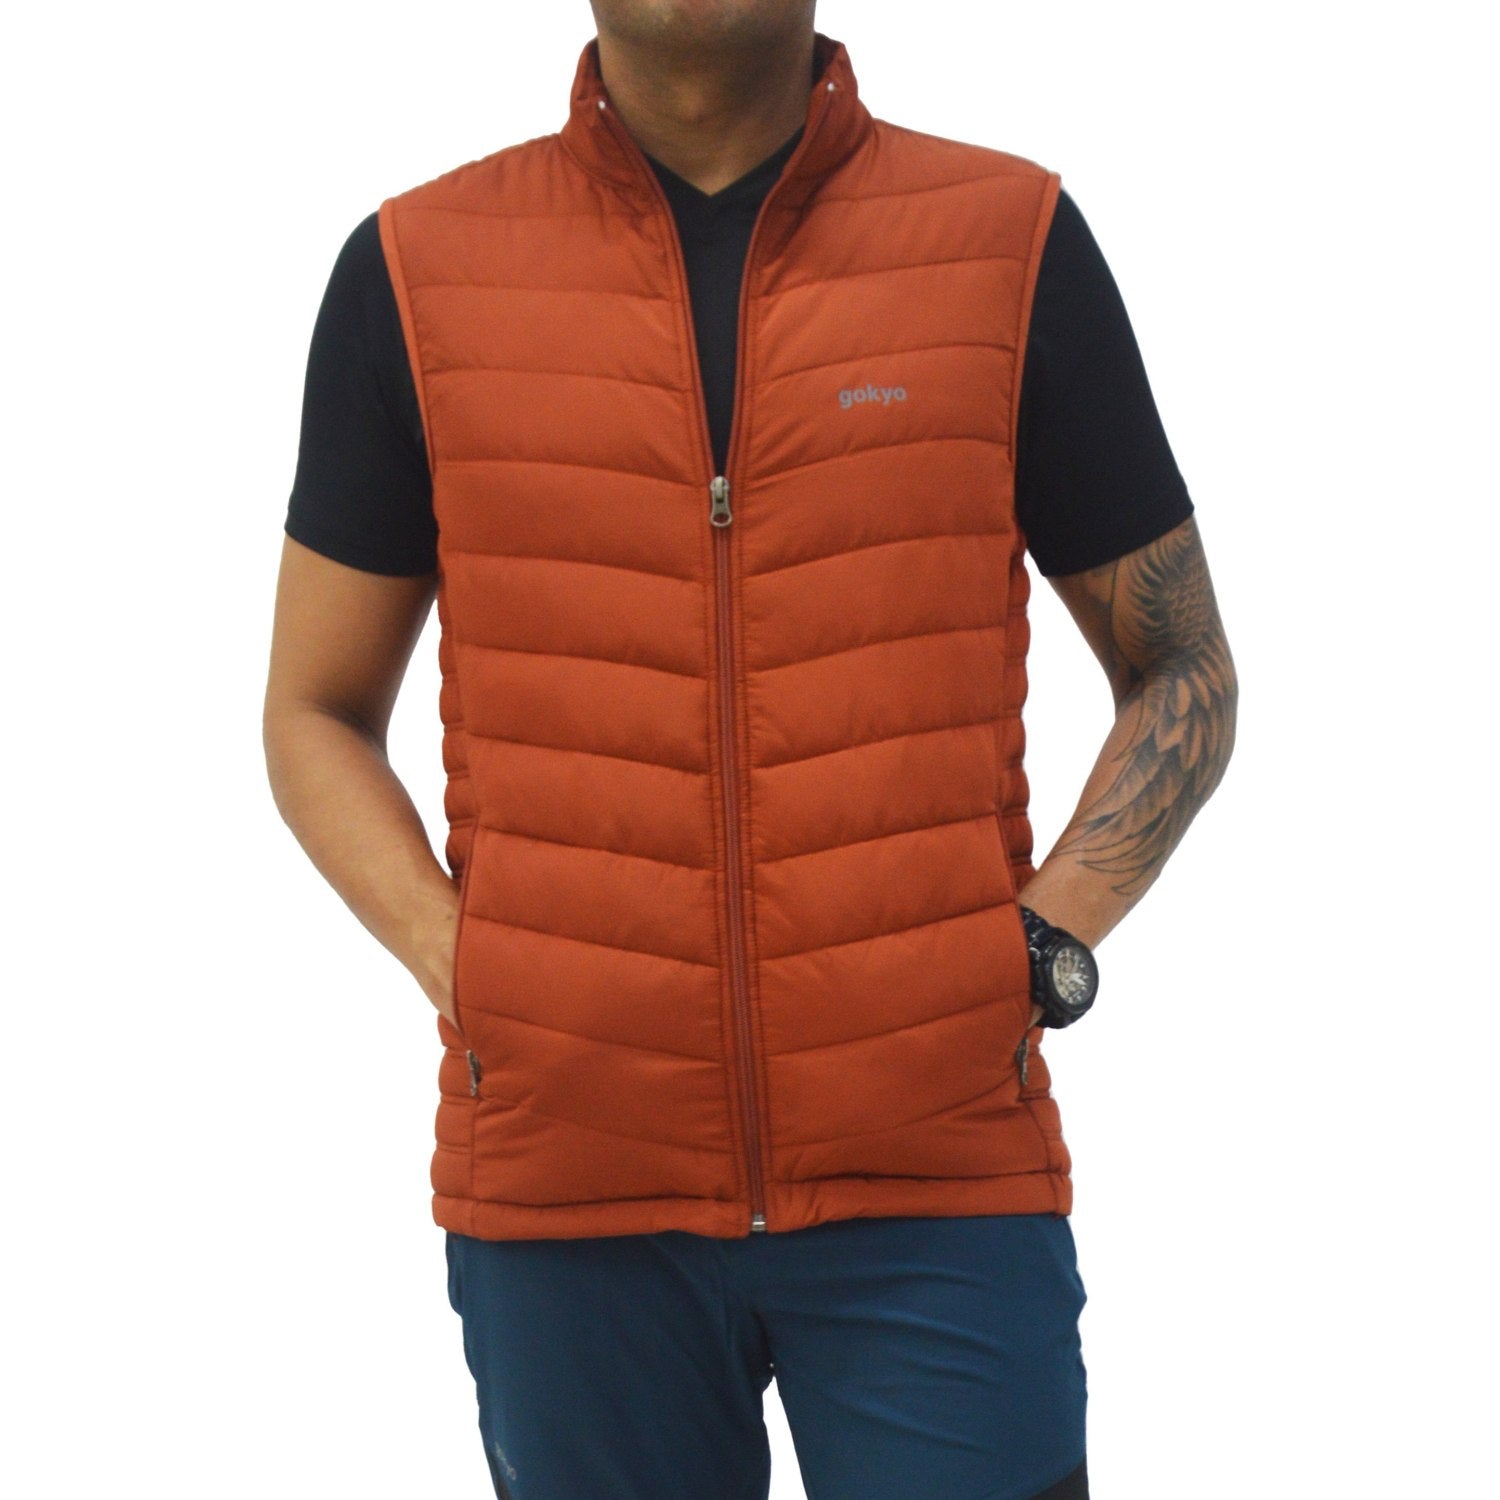 Buy Gokyo K2 Down Vest Jacket Rust | Jackets at Gokyo Outdoor Clothing & Gear